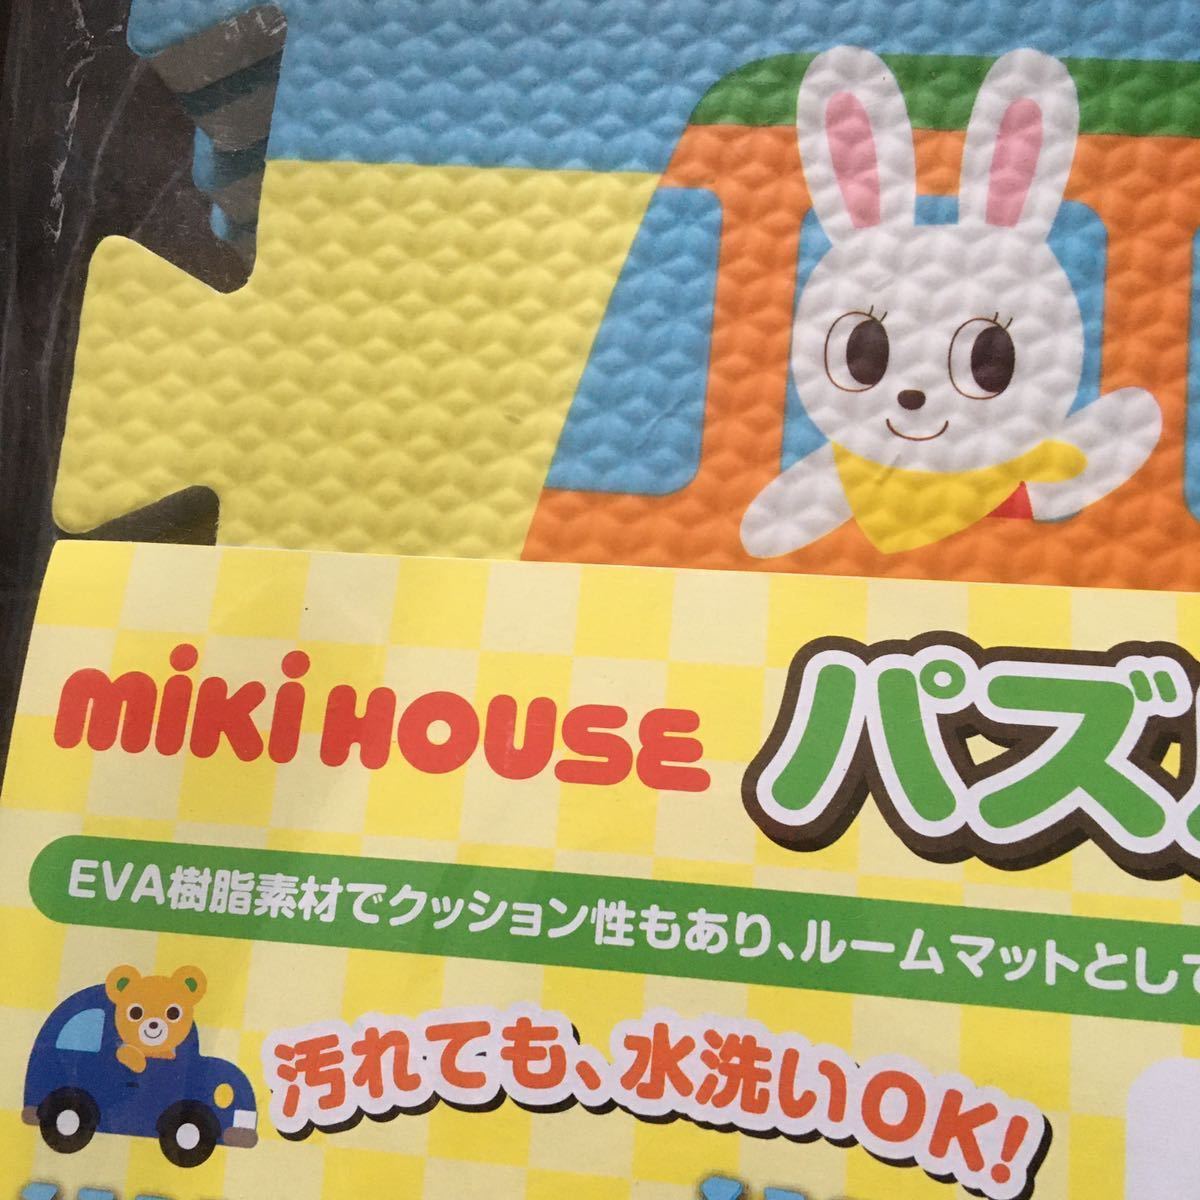  Miki House! мозаика коврик! коврик! надежно толщина! Novelty! нестандартный!